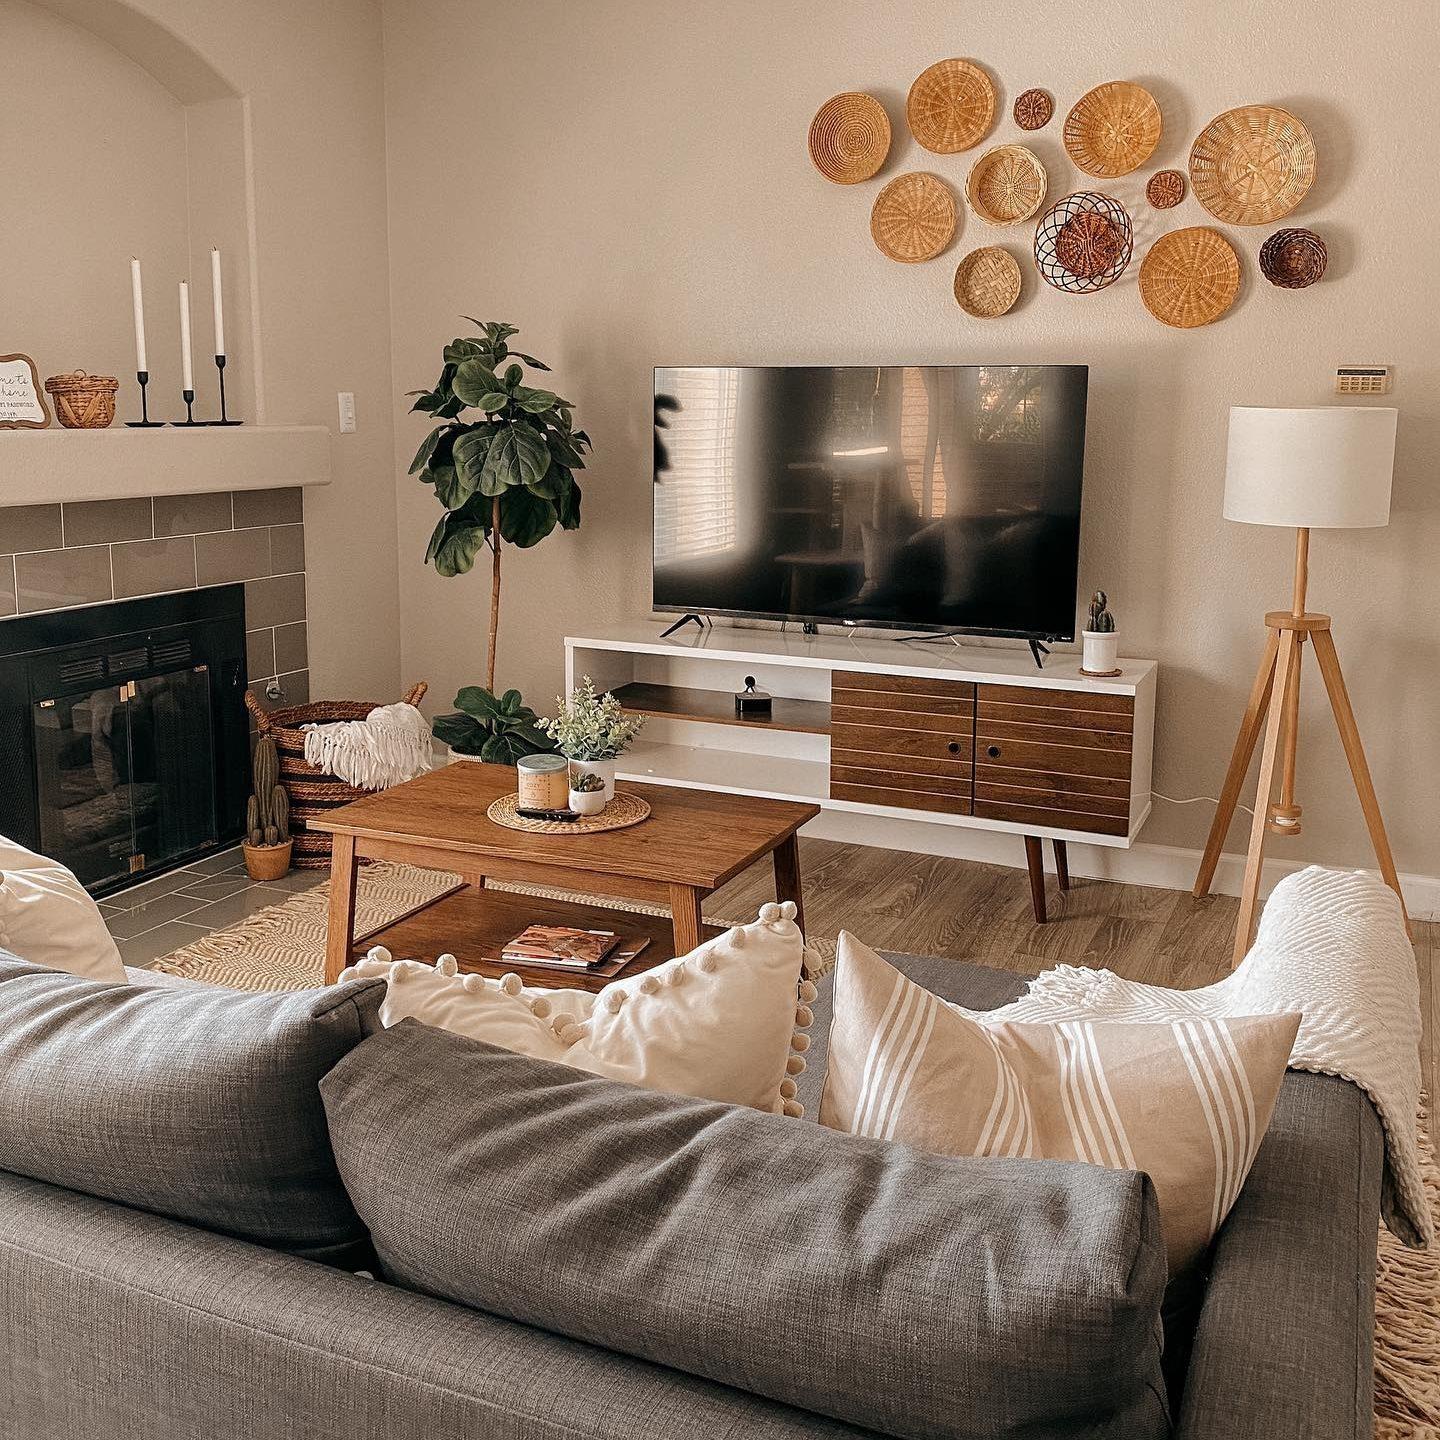 simple apartment living room decorating ideas